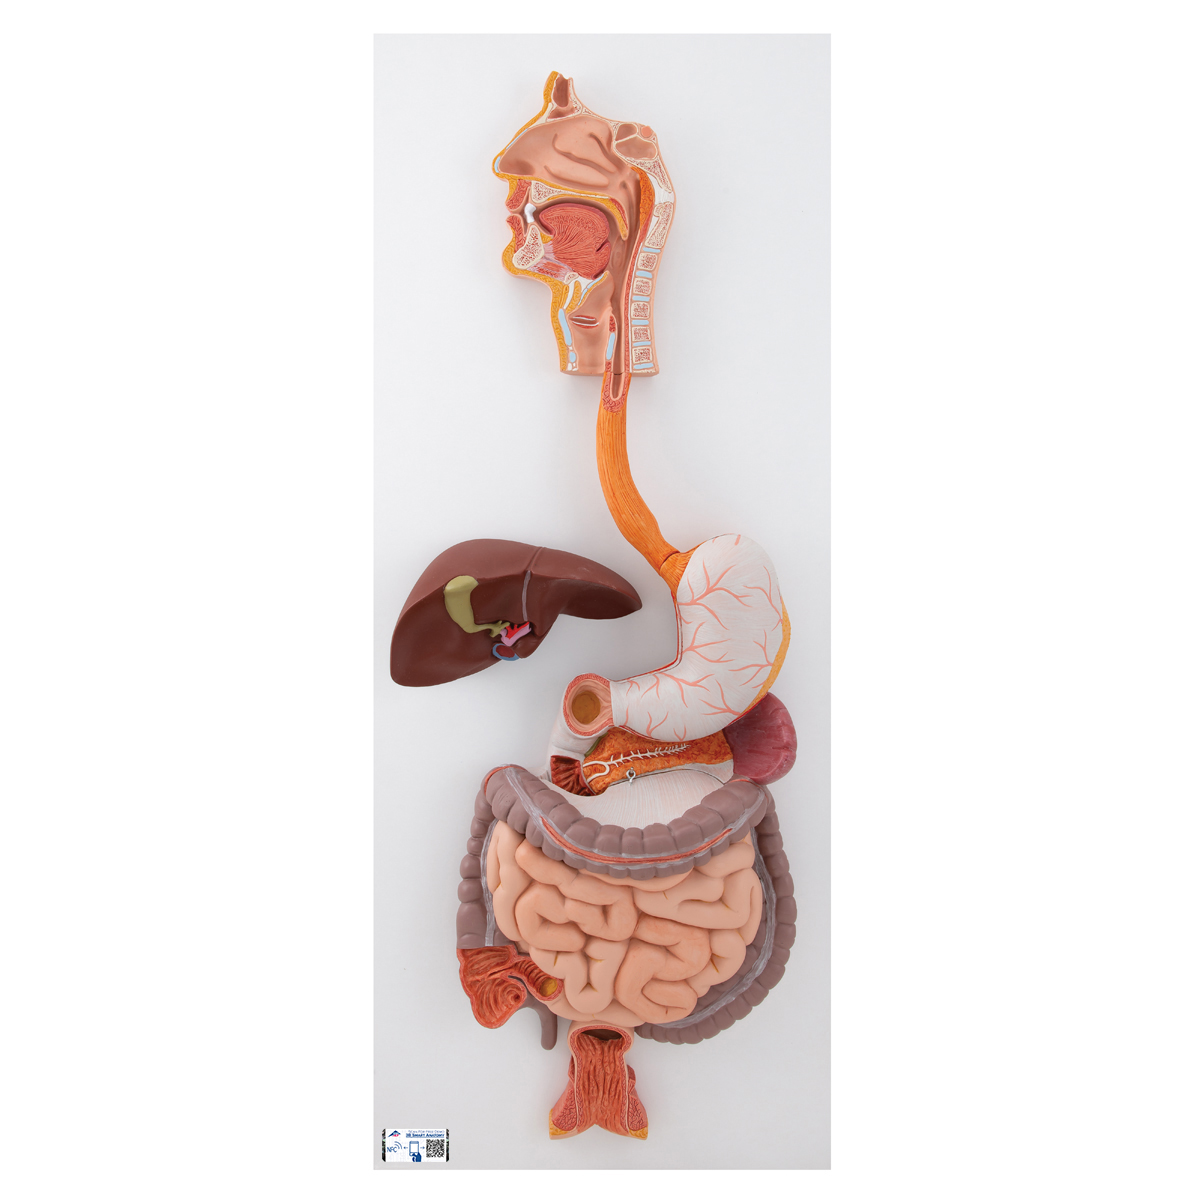 Arriba 92+ imagen modelo del sistema digestivo